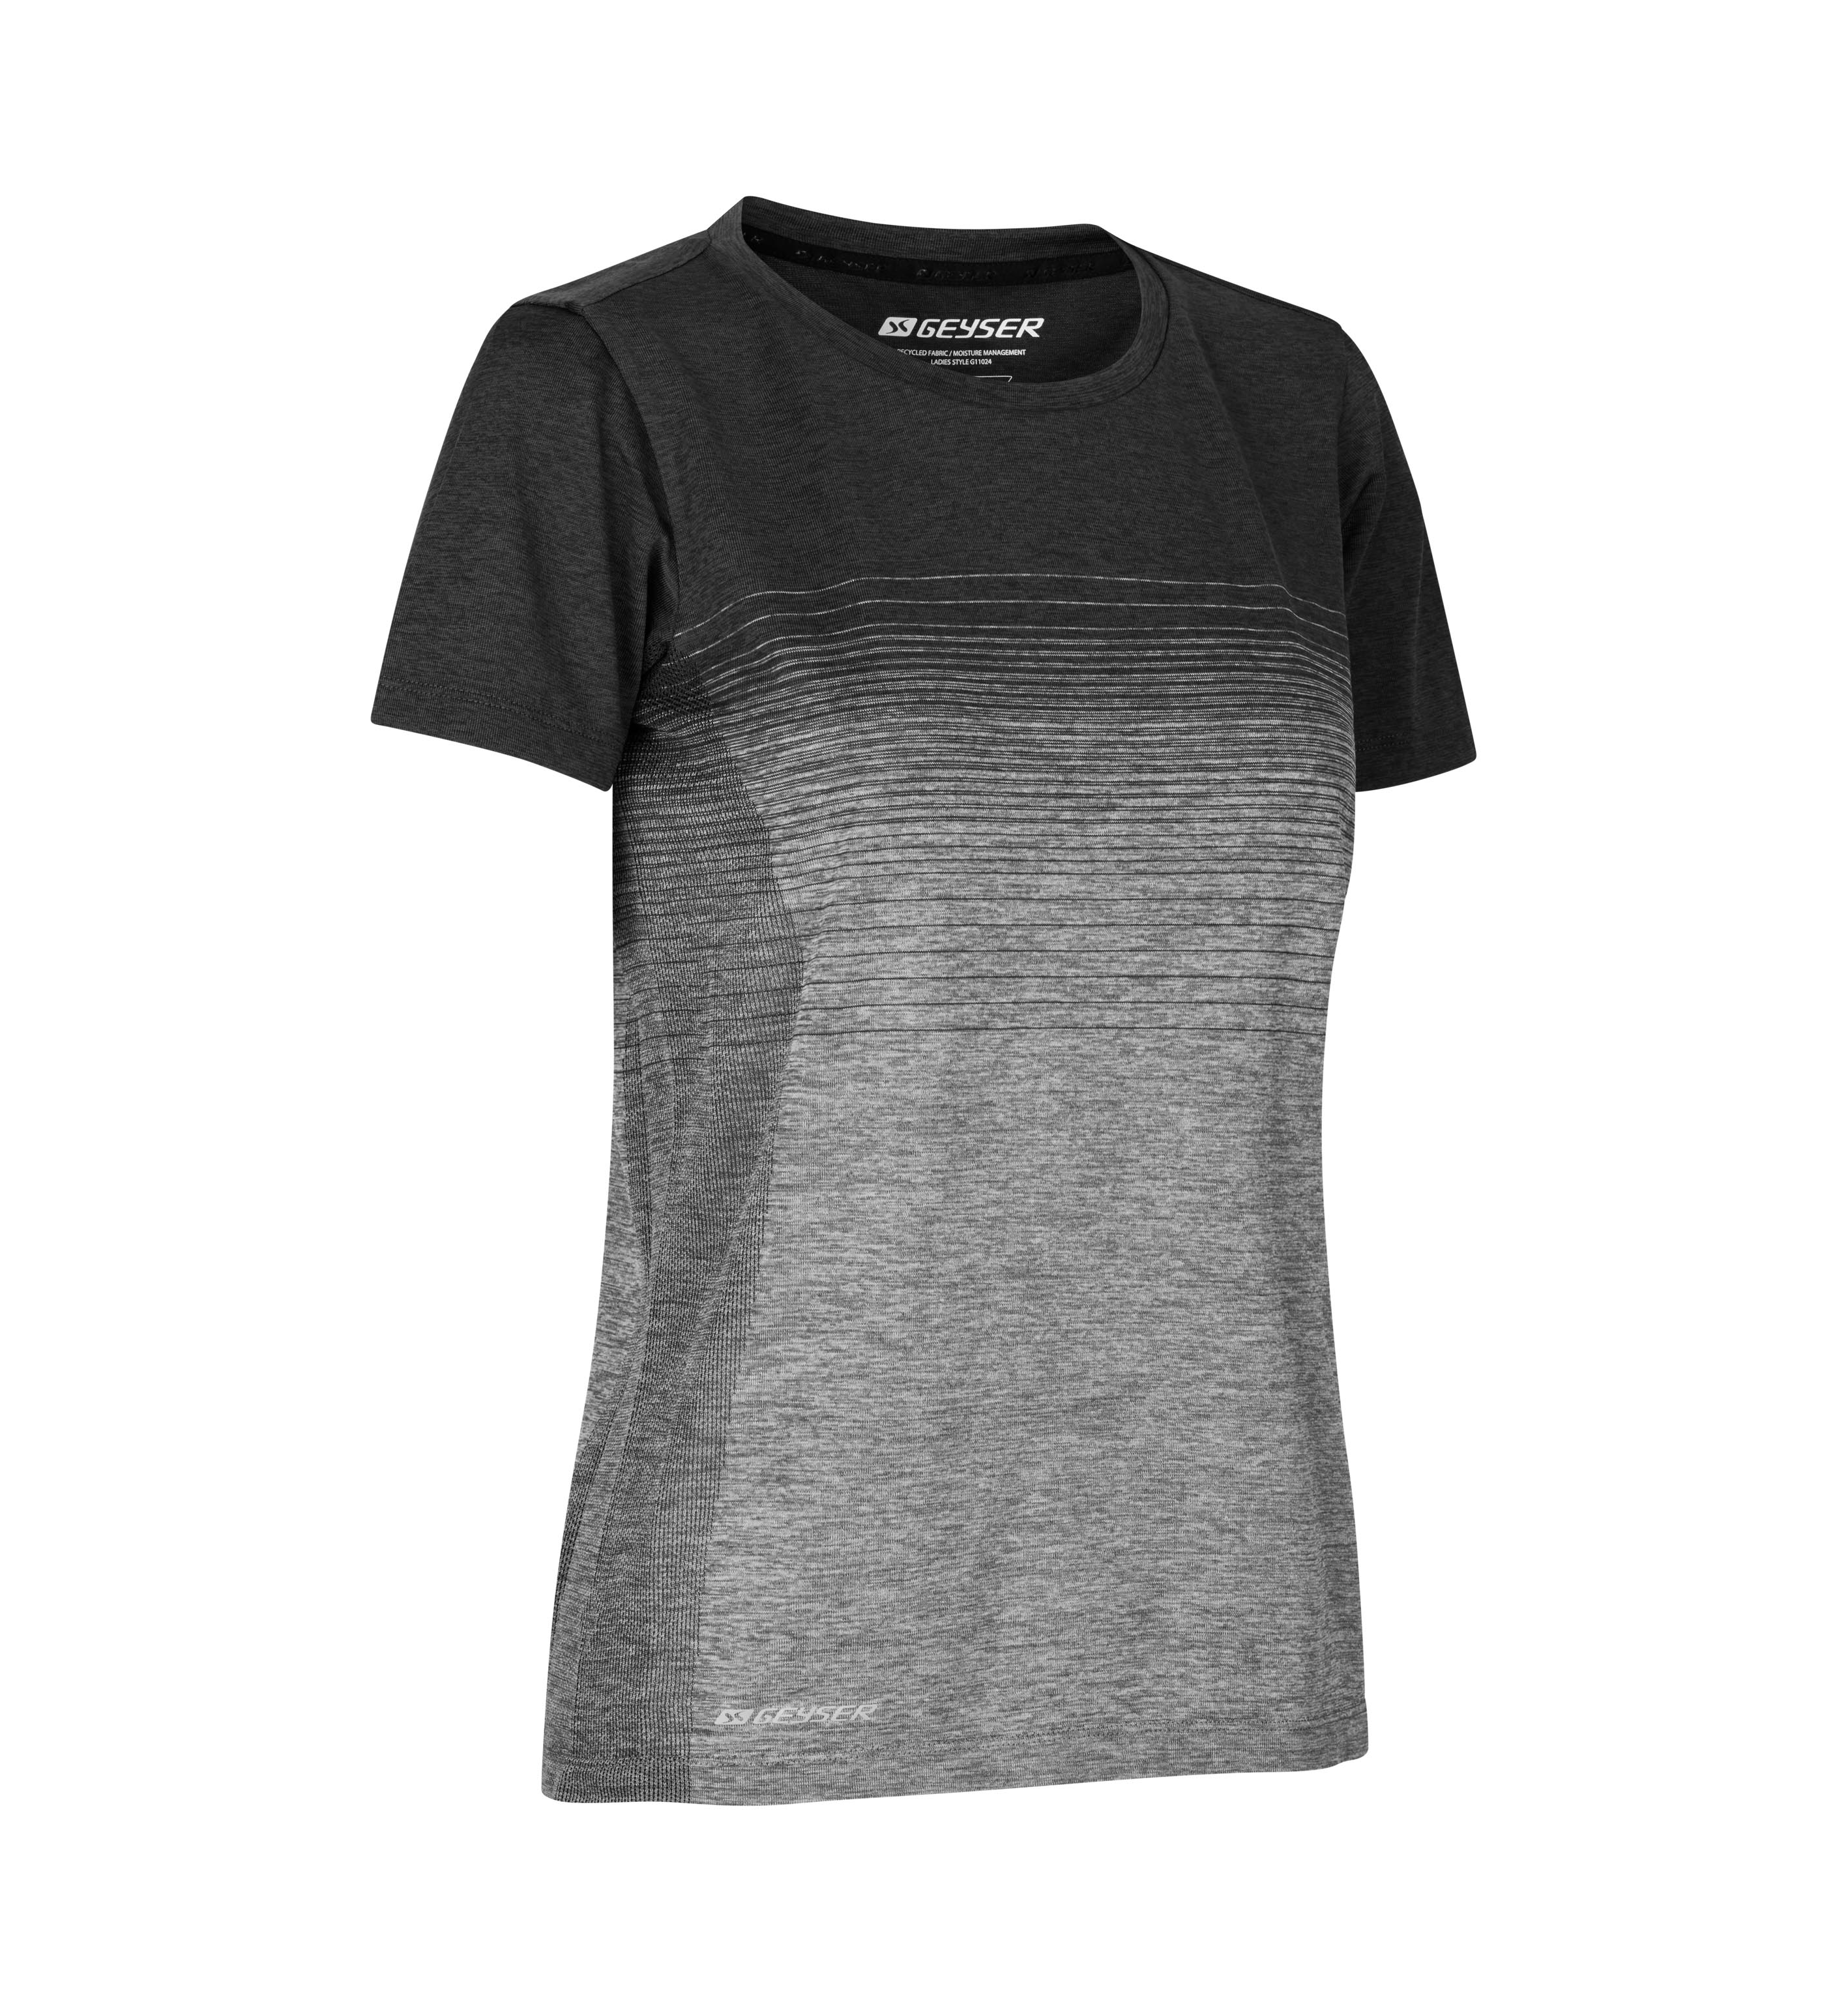 ID GEYSER striped T-shirt | seamless | Damen